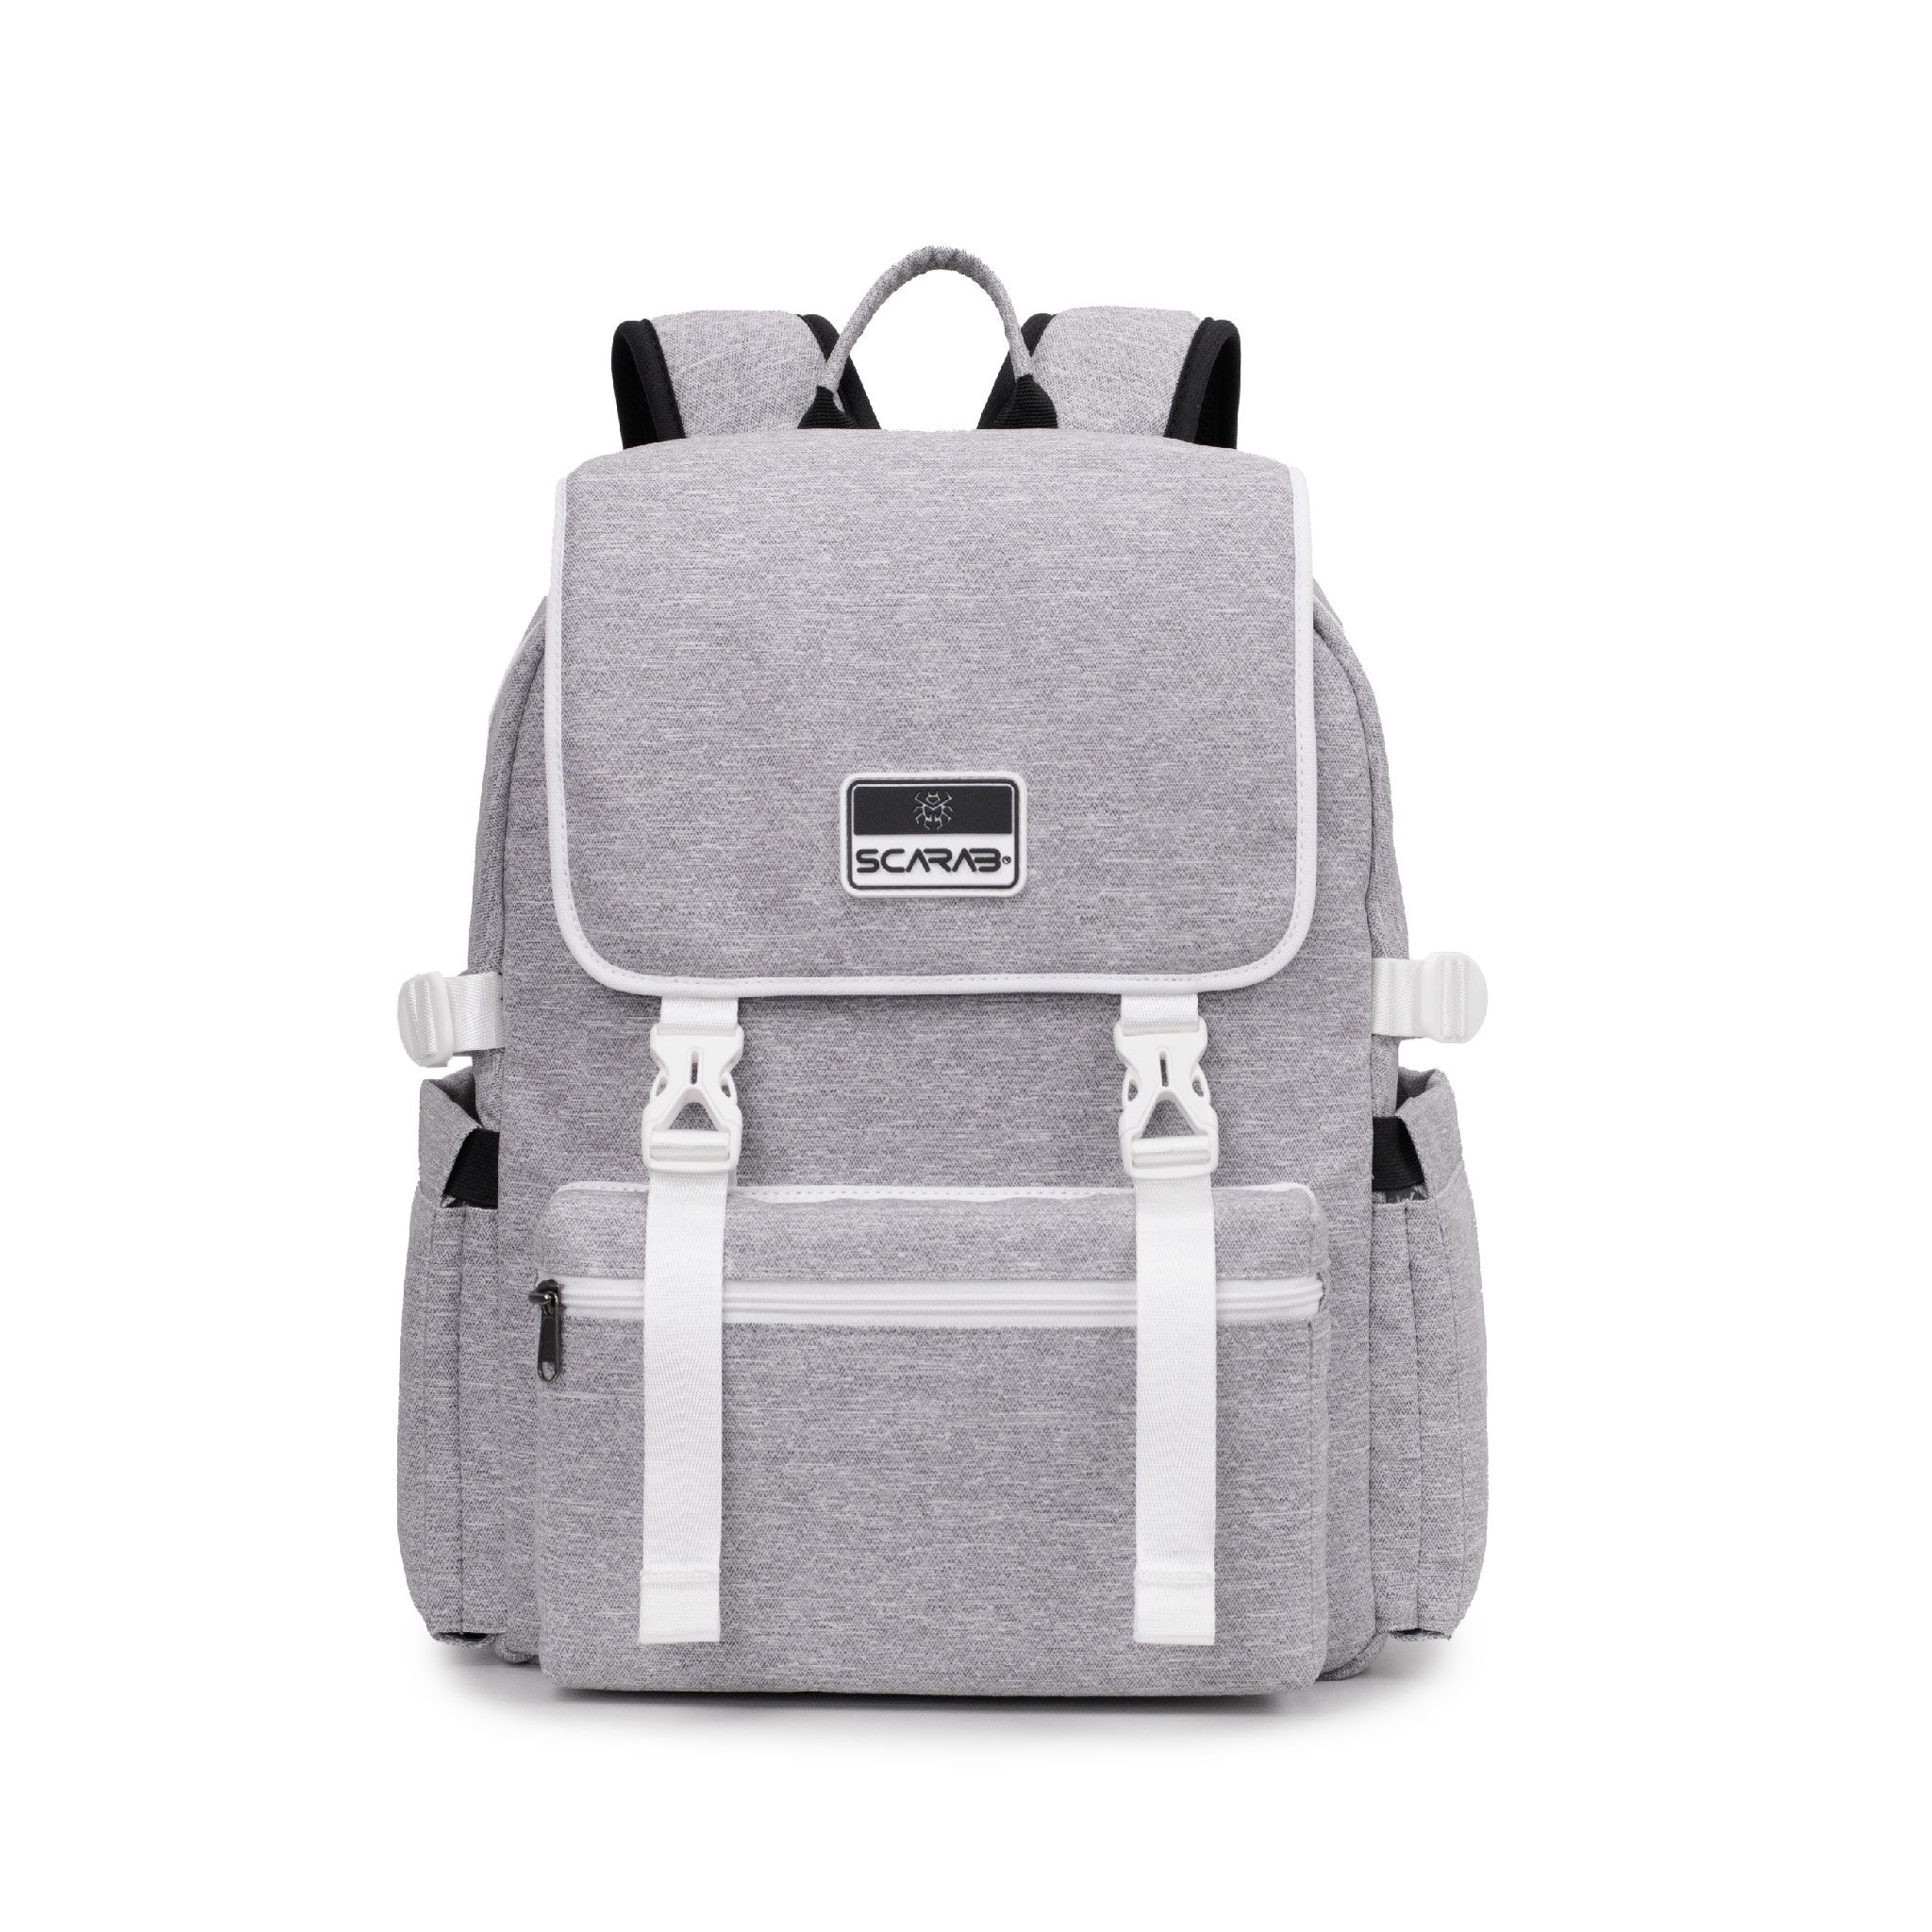  Classmate Backpack - Light Grey 